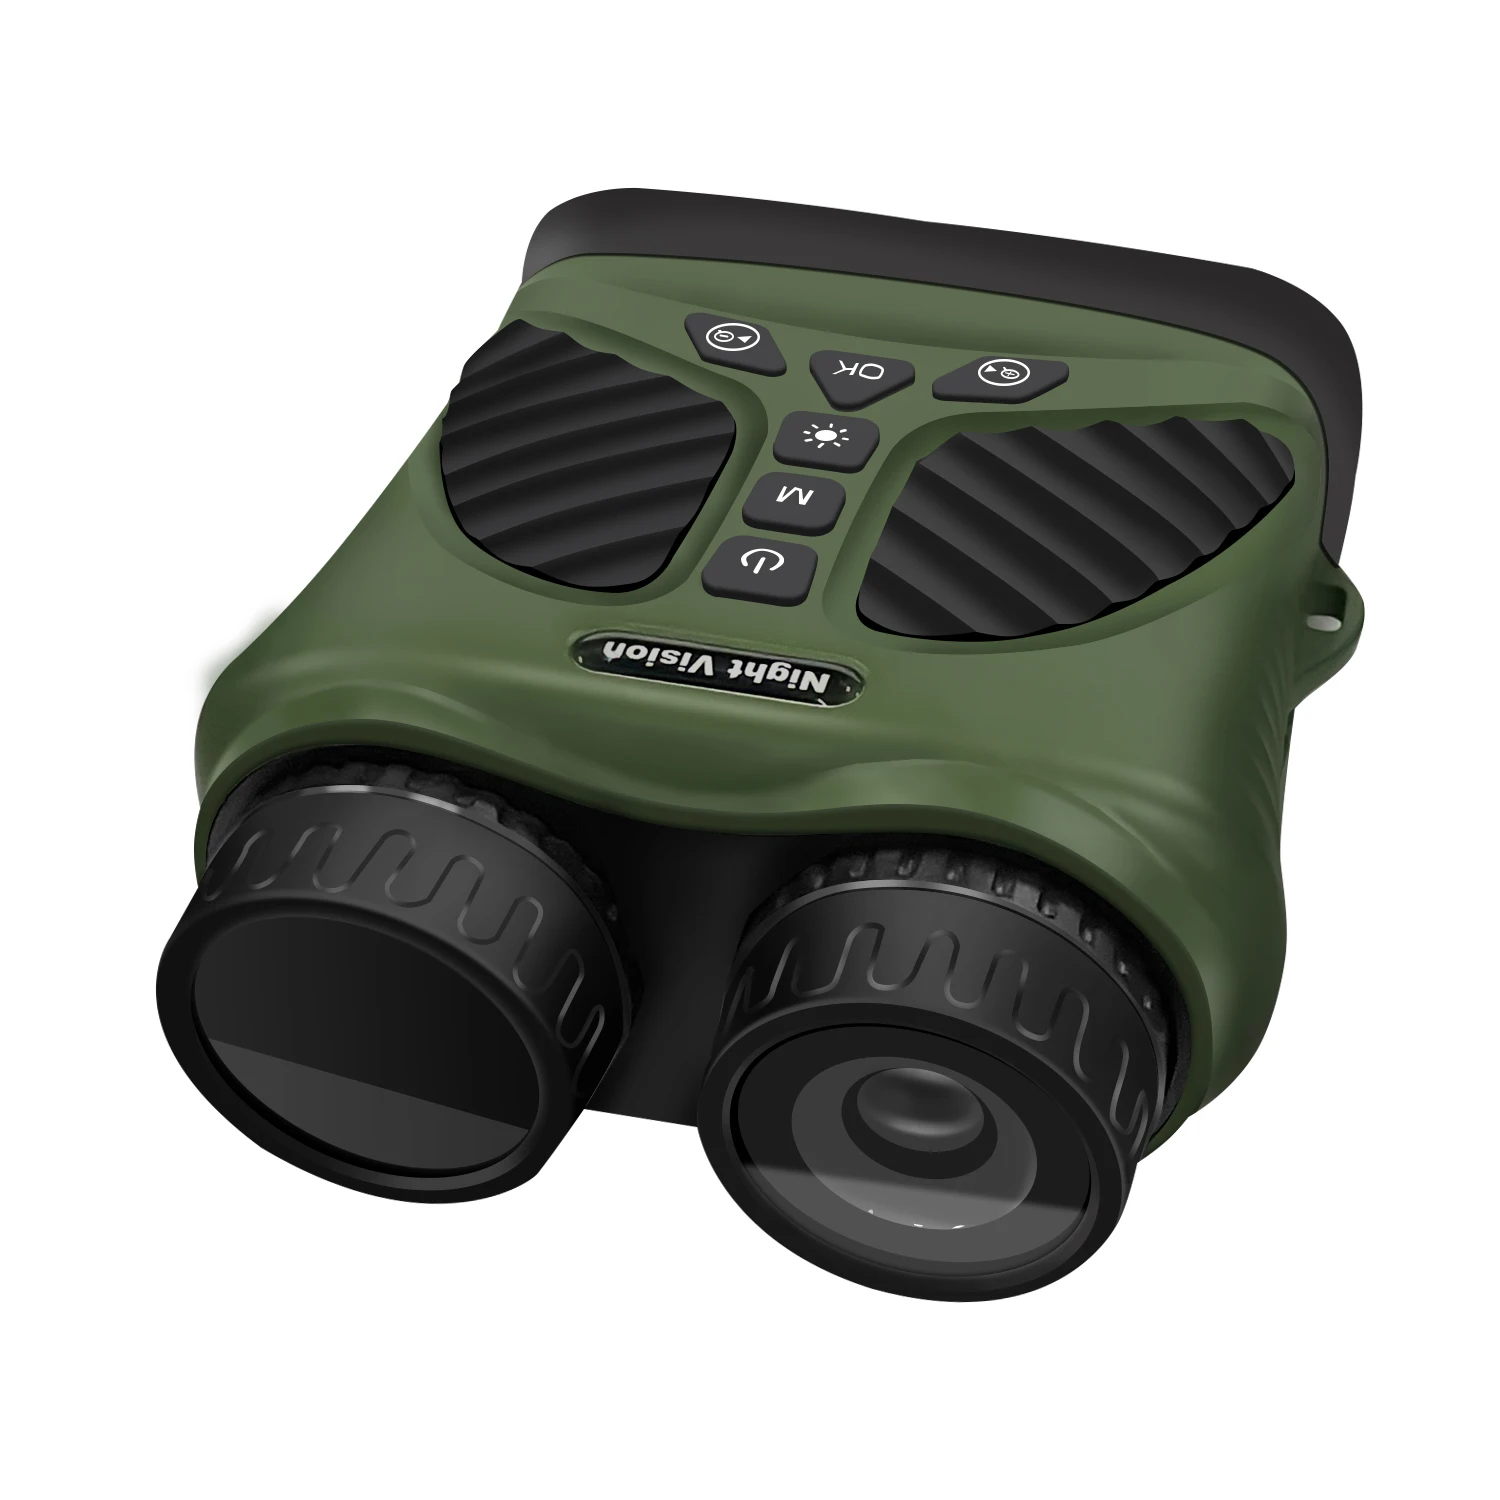 Powerful IR illuminator 350 m nv binoculars Backlit Buttons 2.5K digital binoculars 3 inch Display Infrared binoculars digital